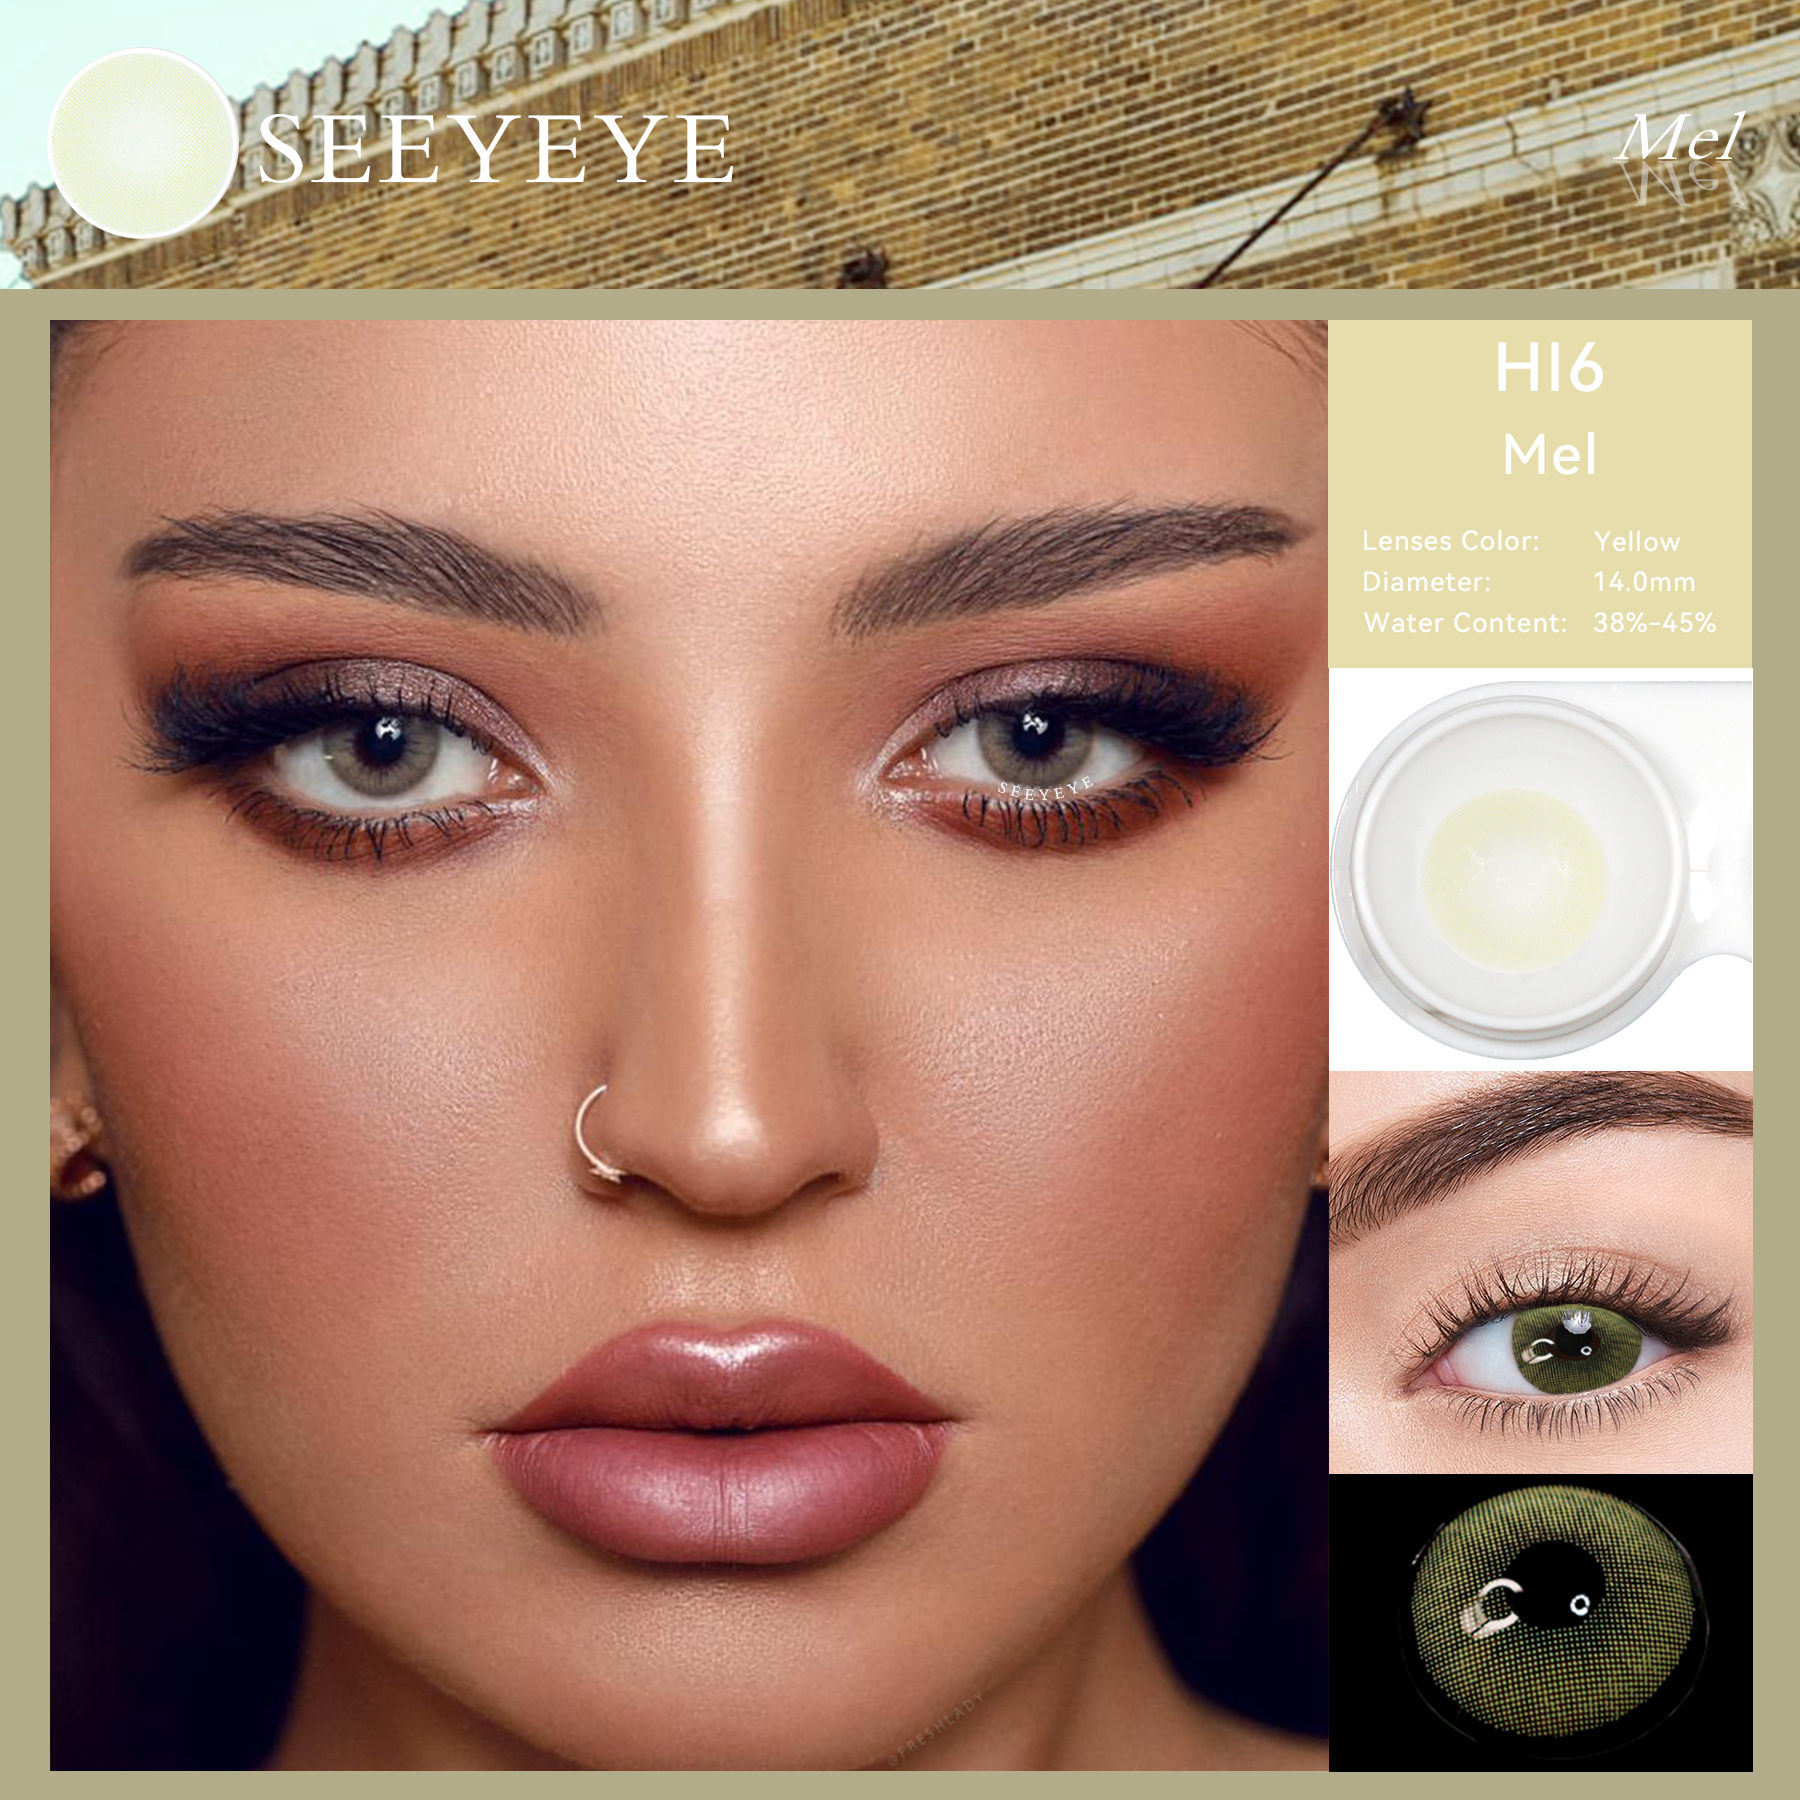 Seeyeye Hi Series Natural Look Chinese Cosmetic លក់ដុំព៌ណ Contact Lens តំលៃថោកប្រចាំឆ្នាំ Soft Eyes Contact Lenses